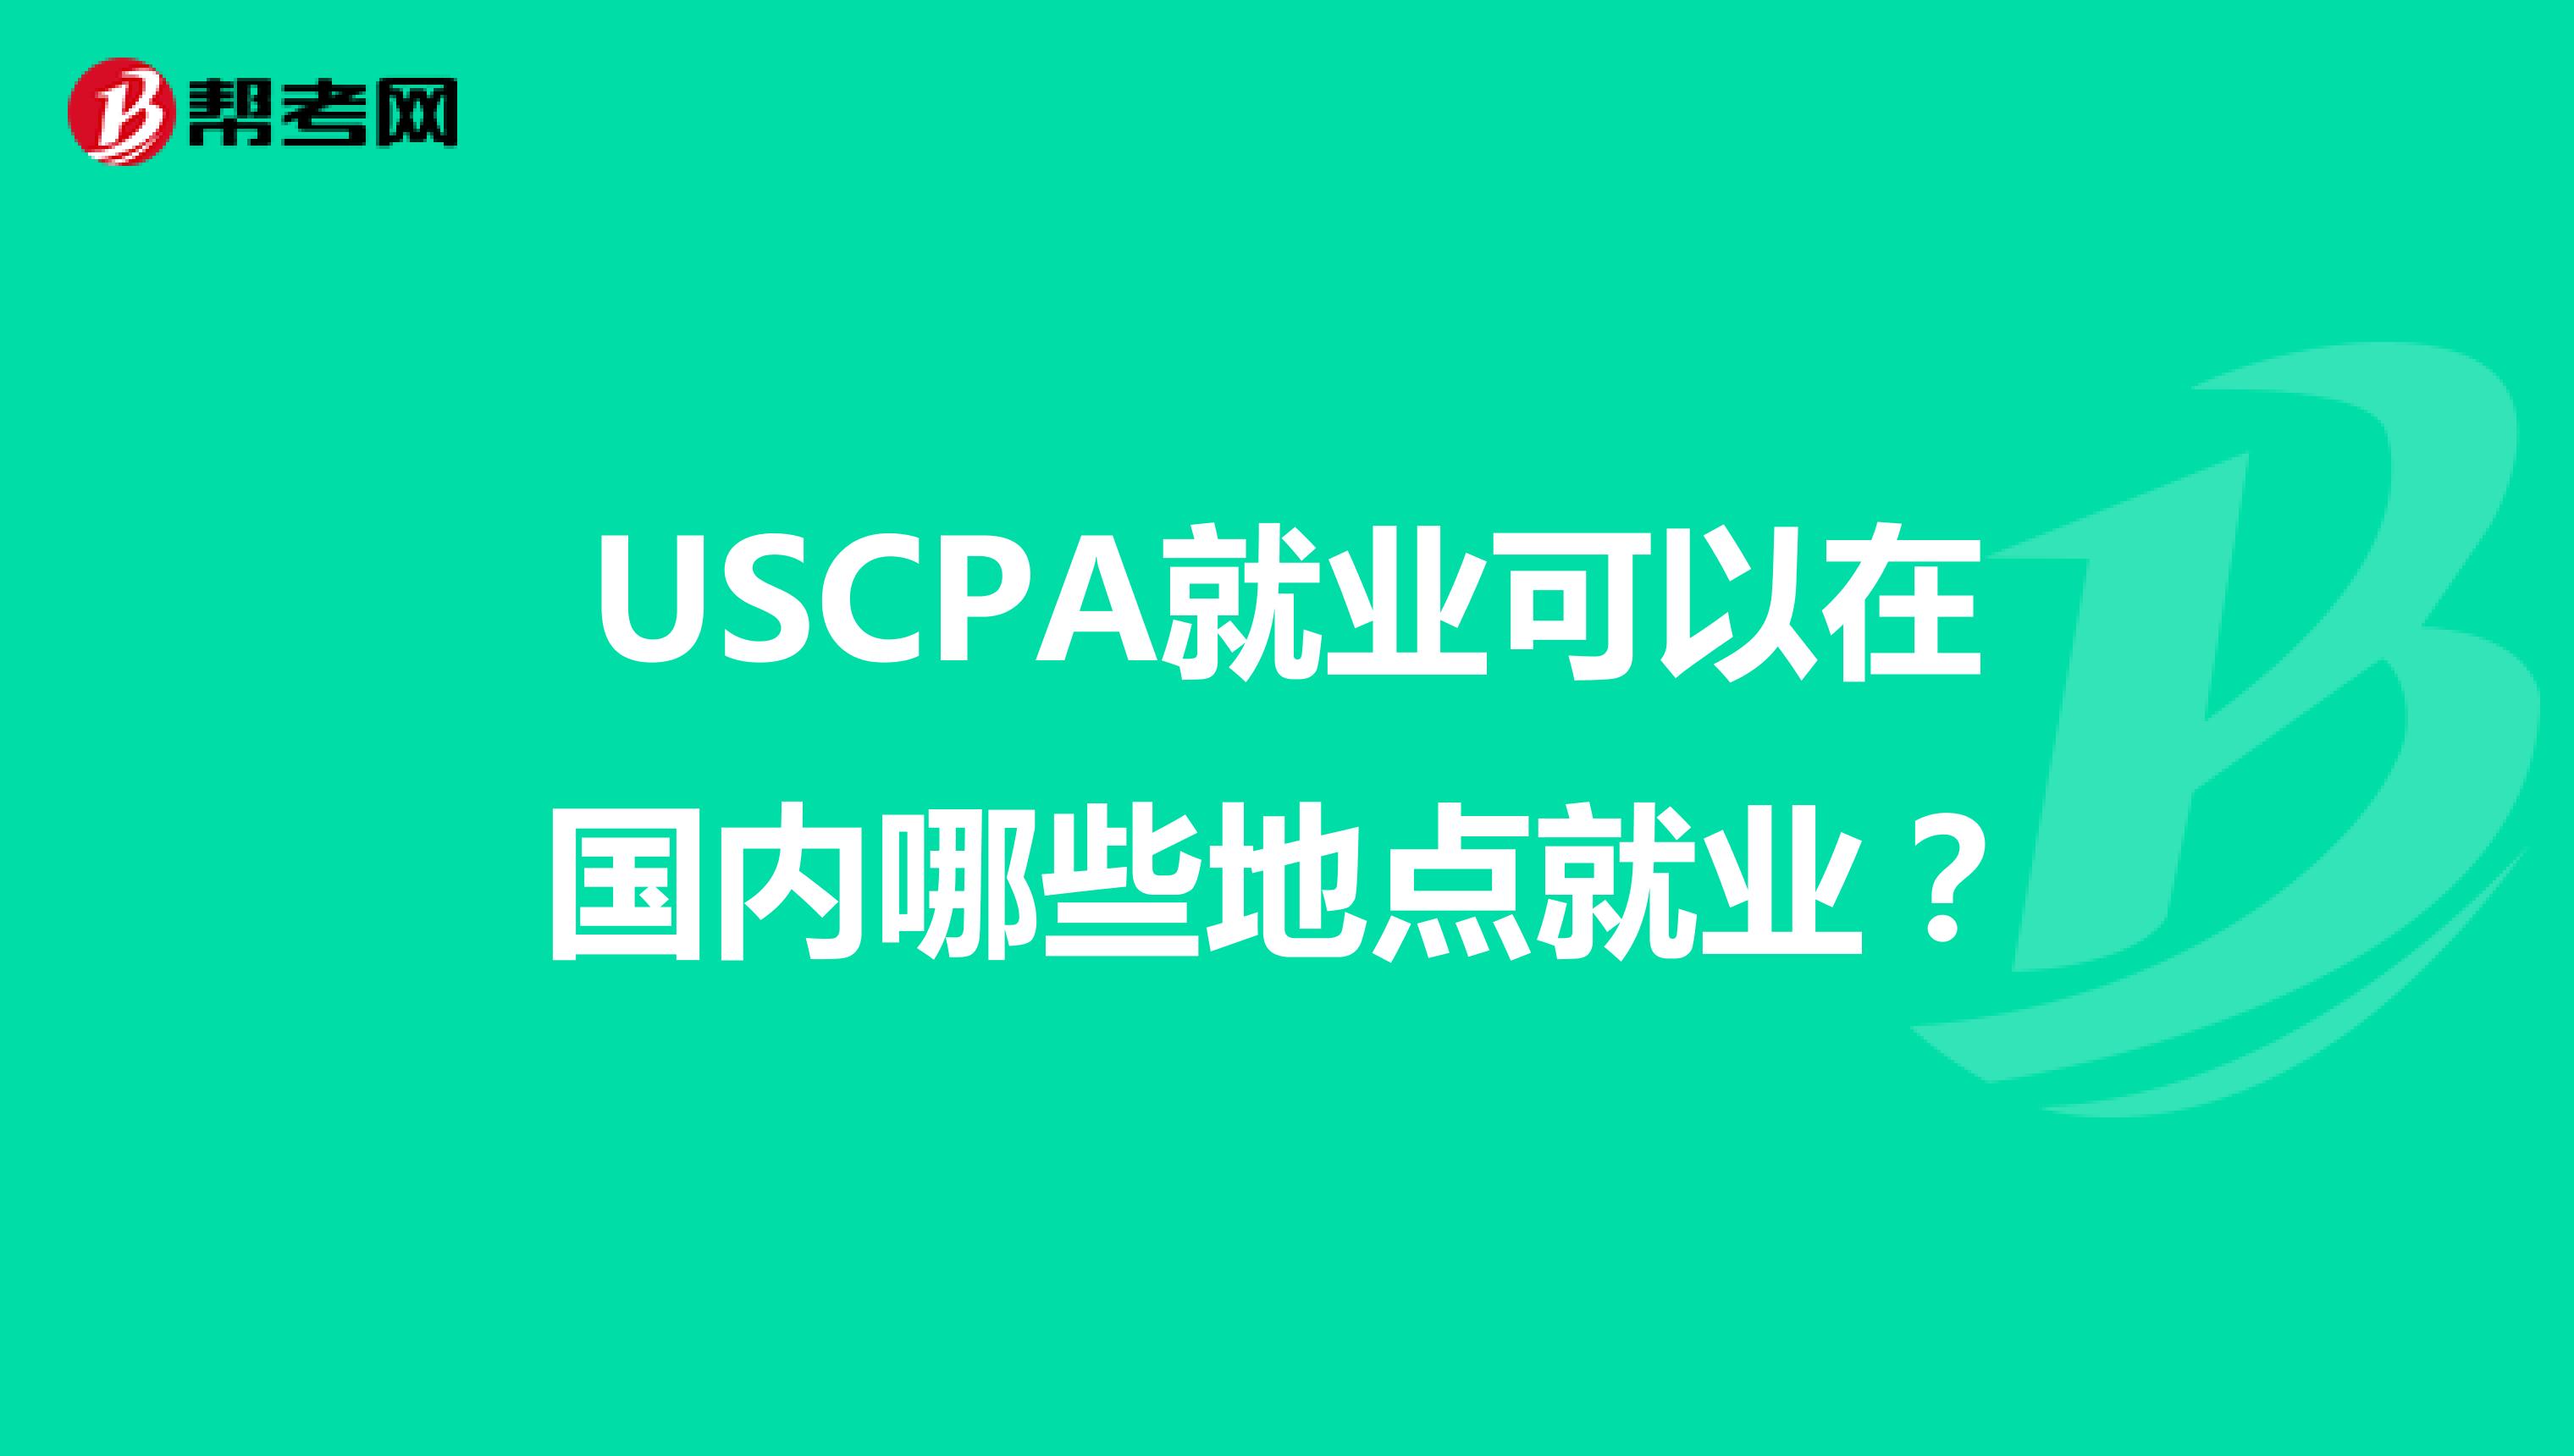 USCPA就业可以在国内哪些地点就业？